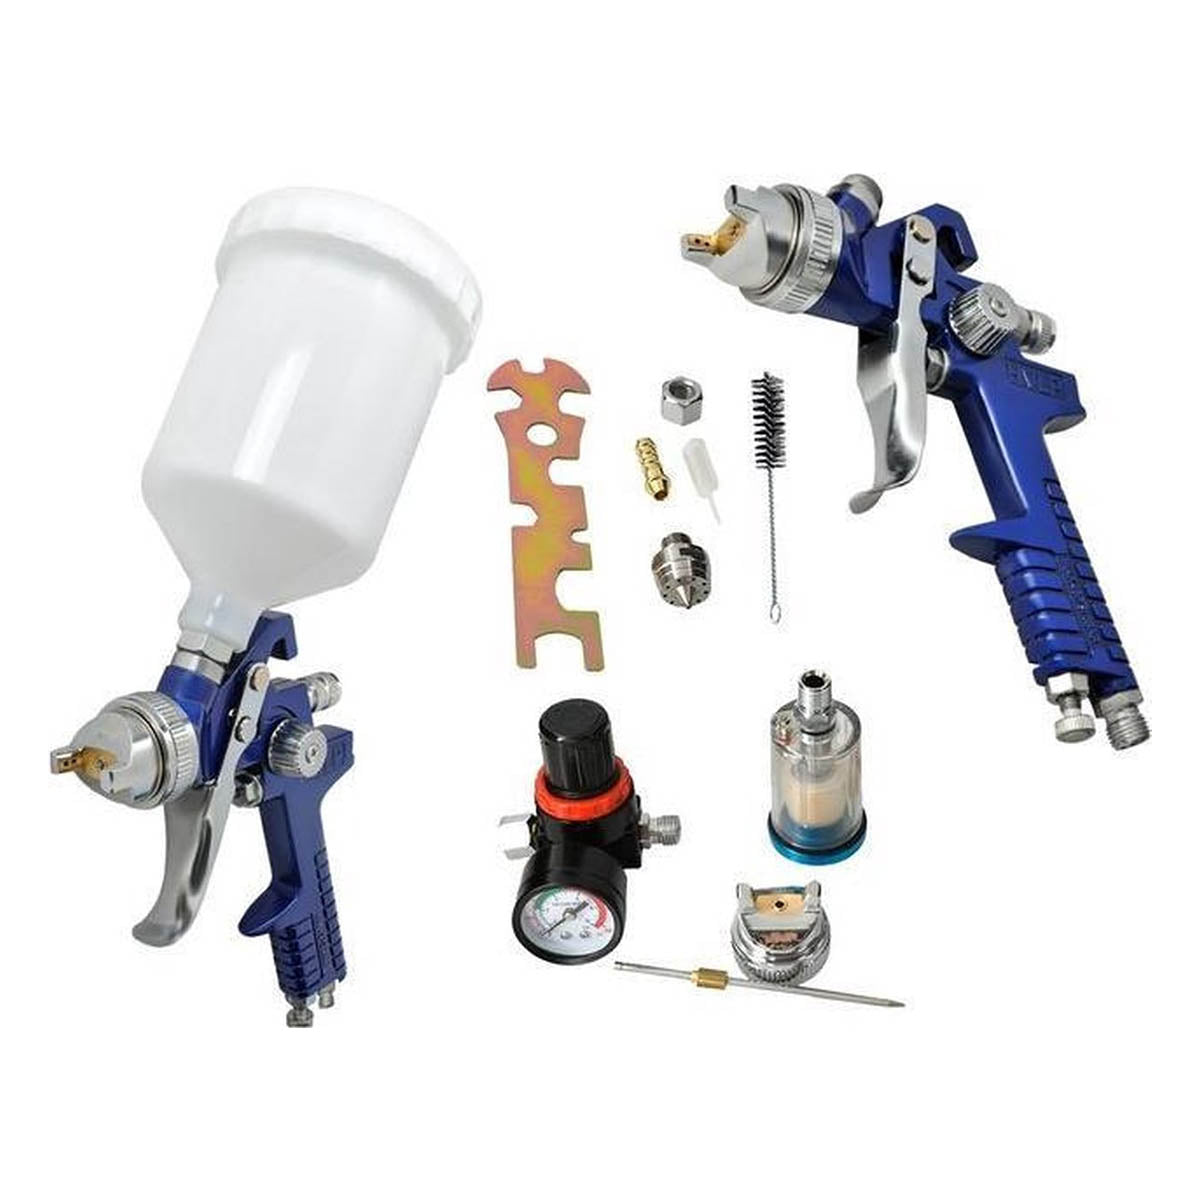 Ariko Rongyao Aflakpistool Spuitpistool | Lucht verfpistool | Compressor spuitpistool met bovenbeker | met accessoires